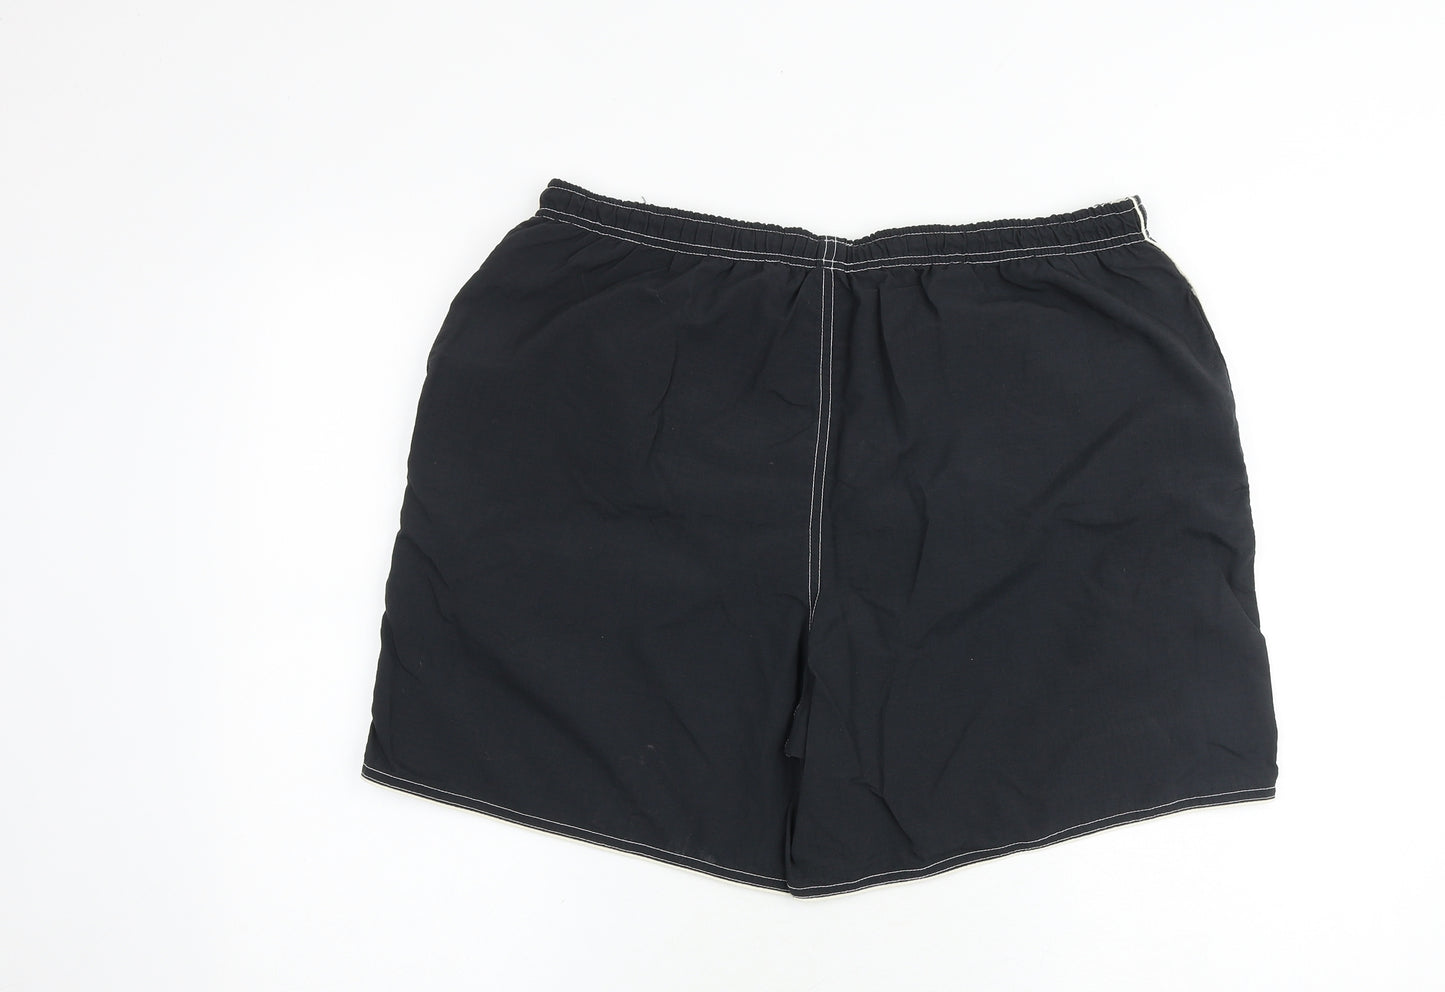 Zantos Mens Black Polyester Bermuda Shorts Size L Regular Drawstring - Contrast Stitching Swim Shorts